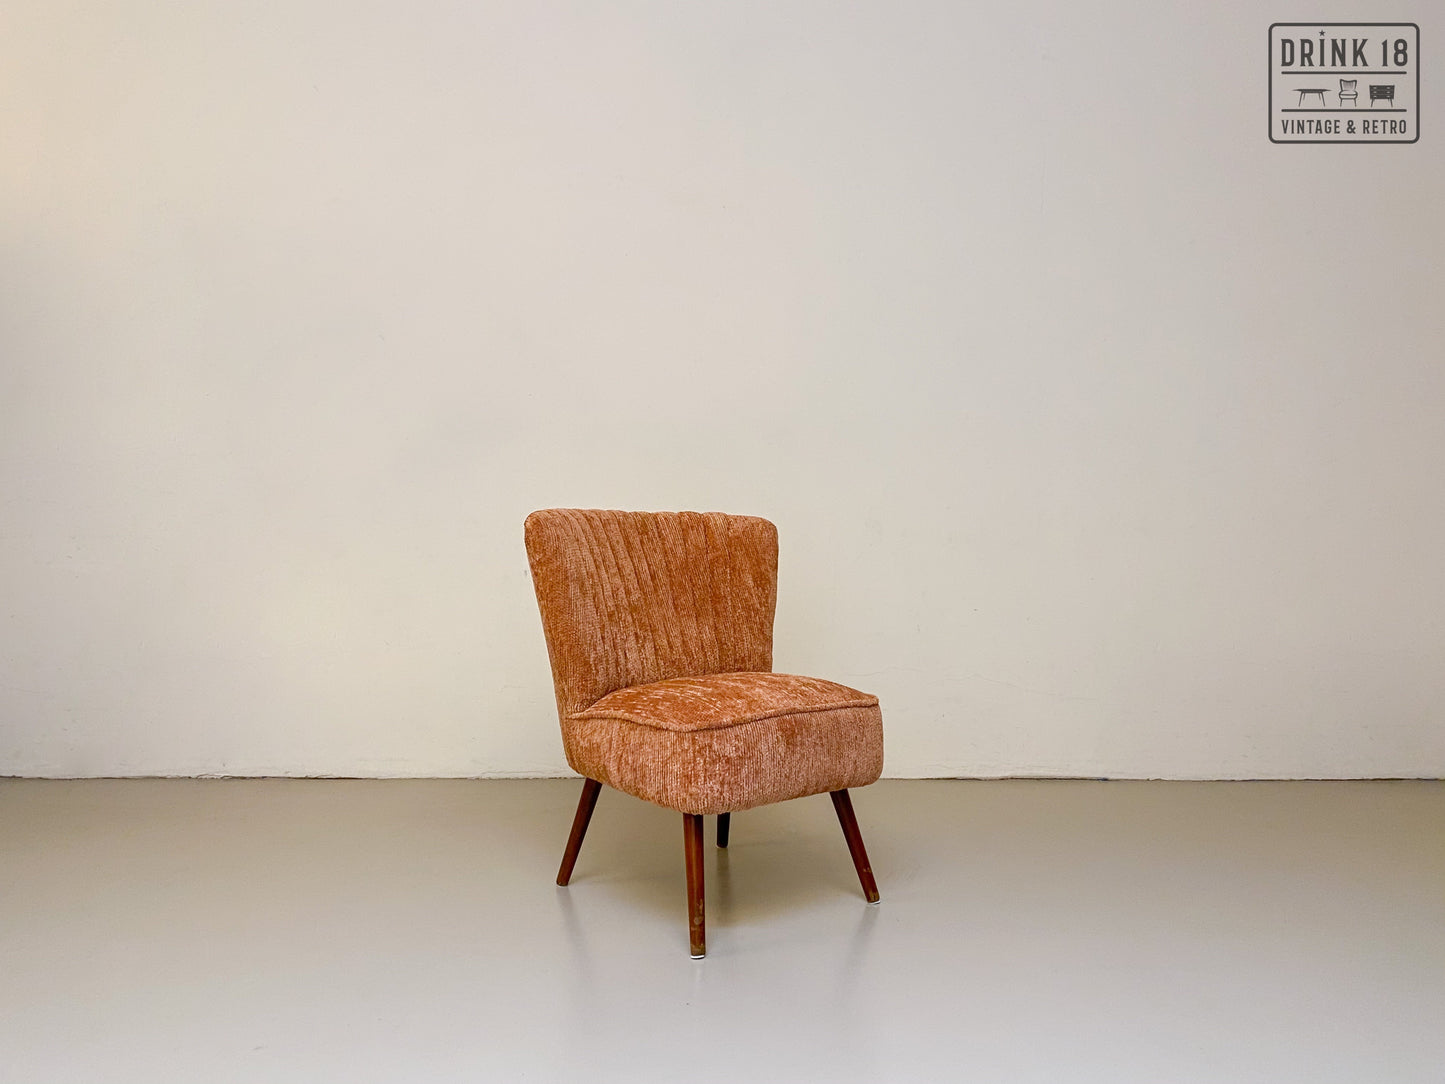 Gereserveerd- Vintage - Expo 58 / Cocktail chair #1